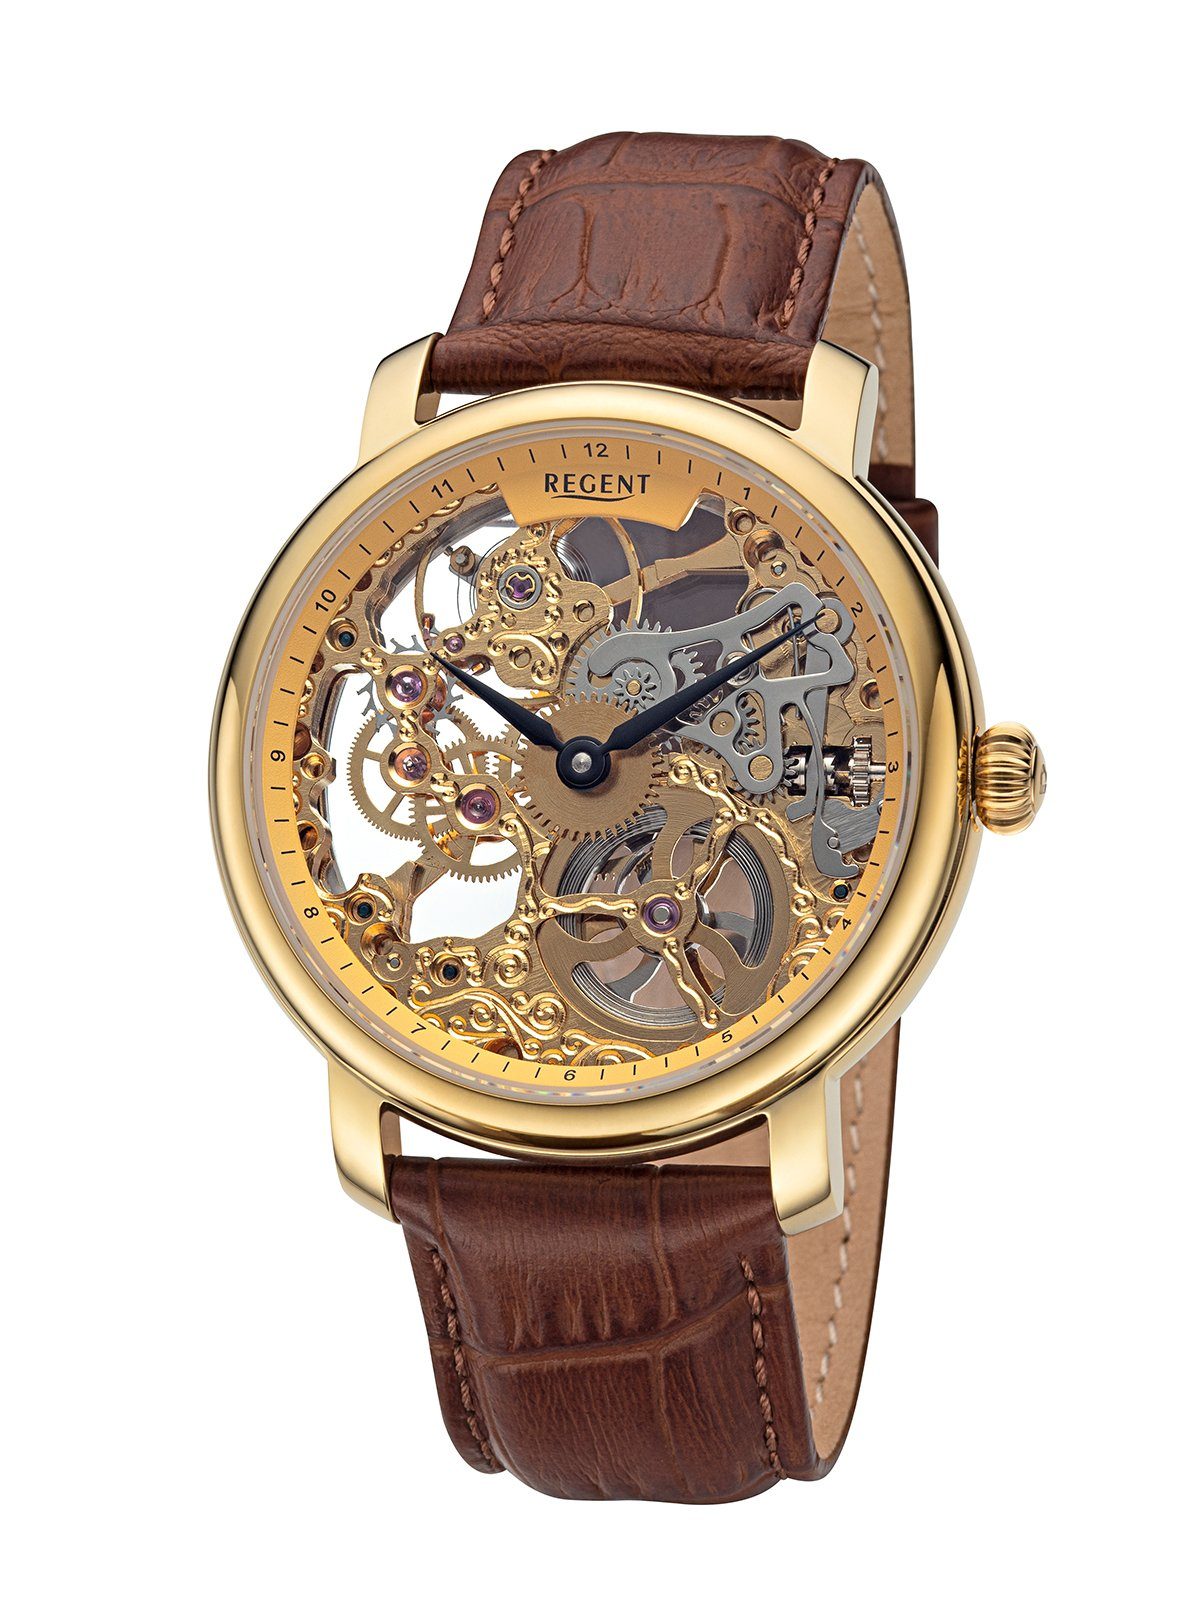 Regent Mechanische Uhr Handaufzug, Skelett-Uhrwerk, Lederband GM-2205, Made in Germany gold